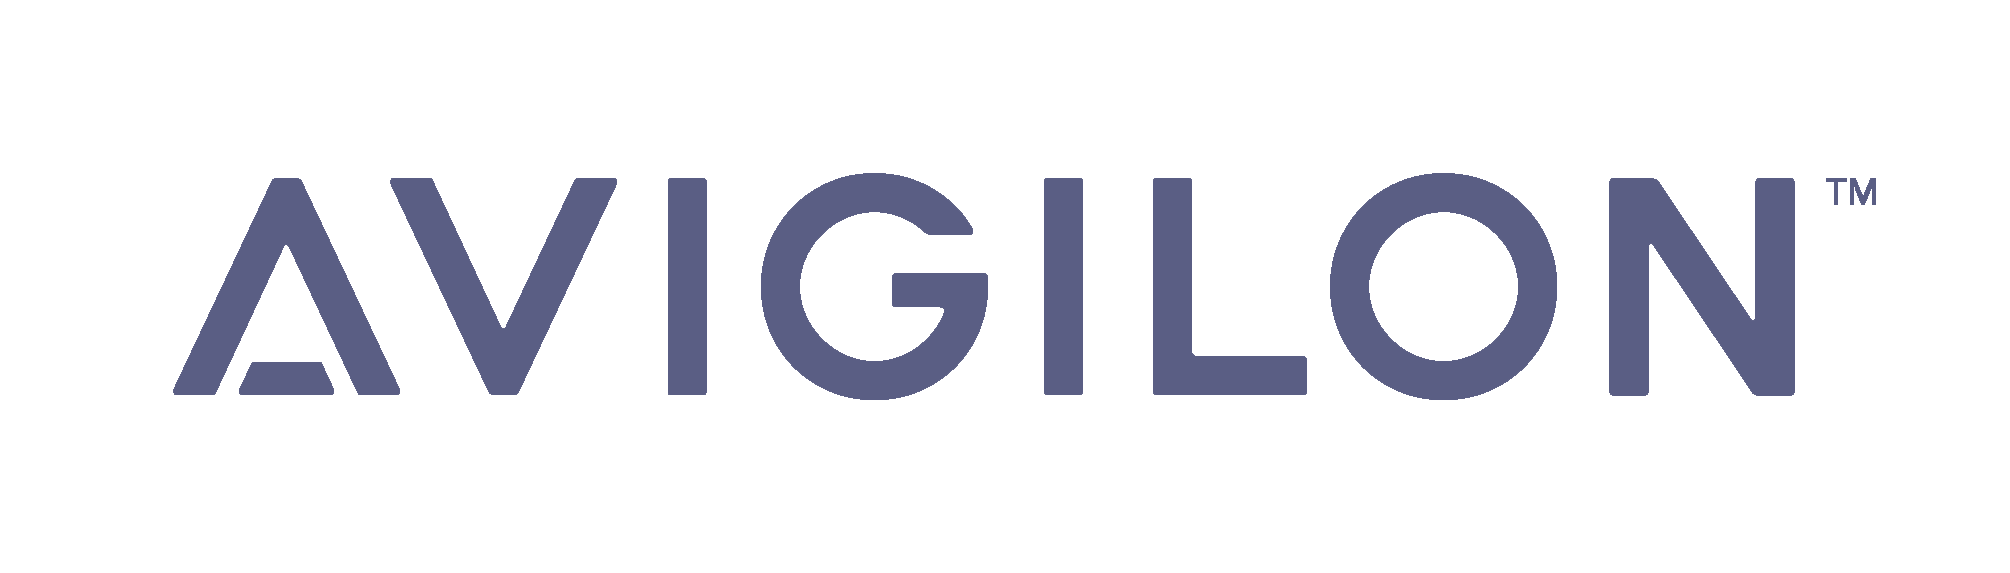 Avigilon Logo with no background